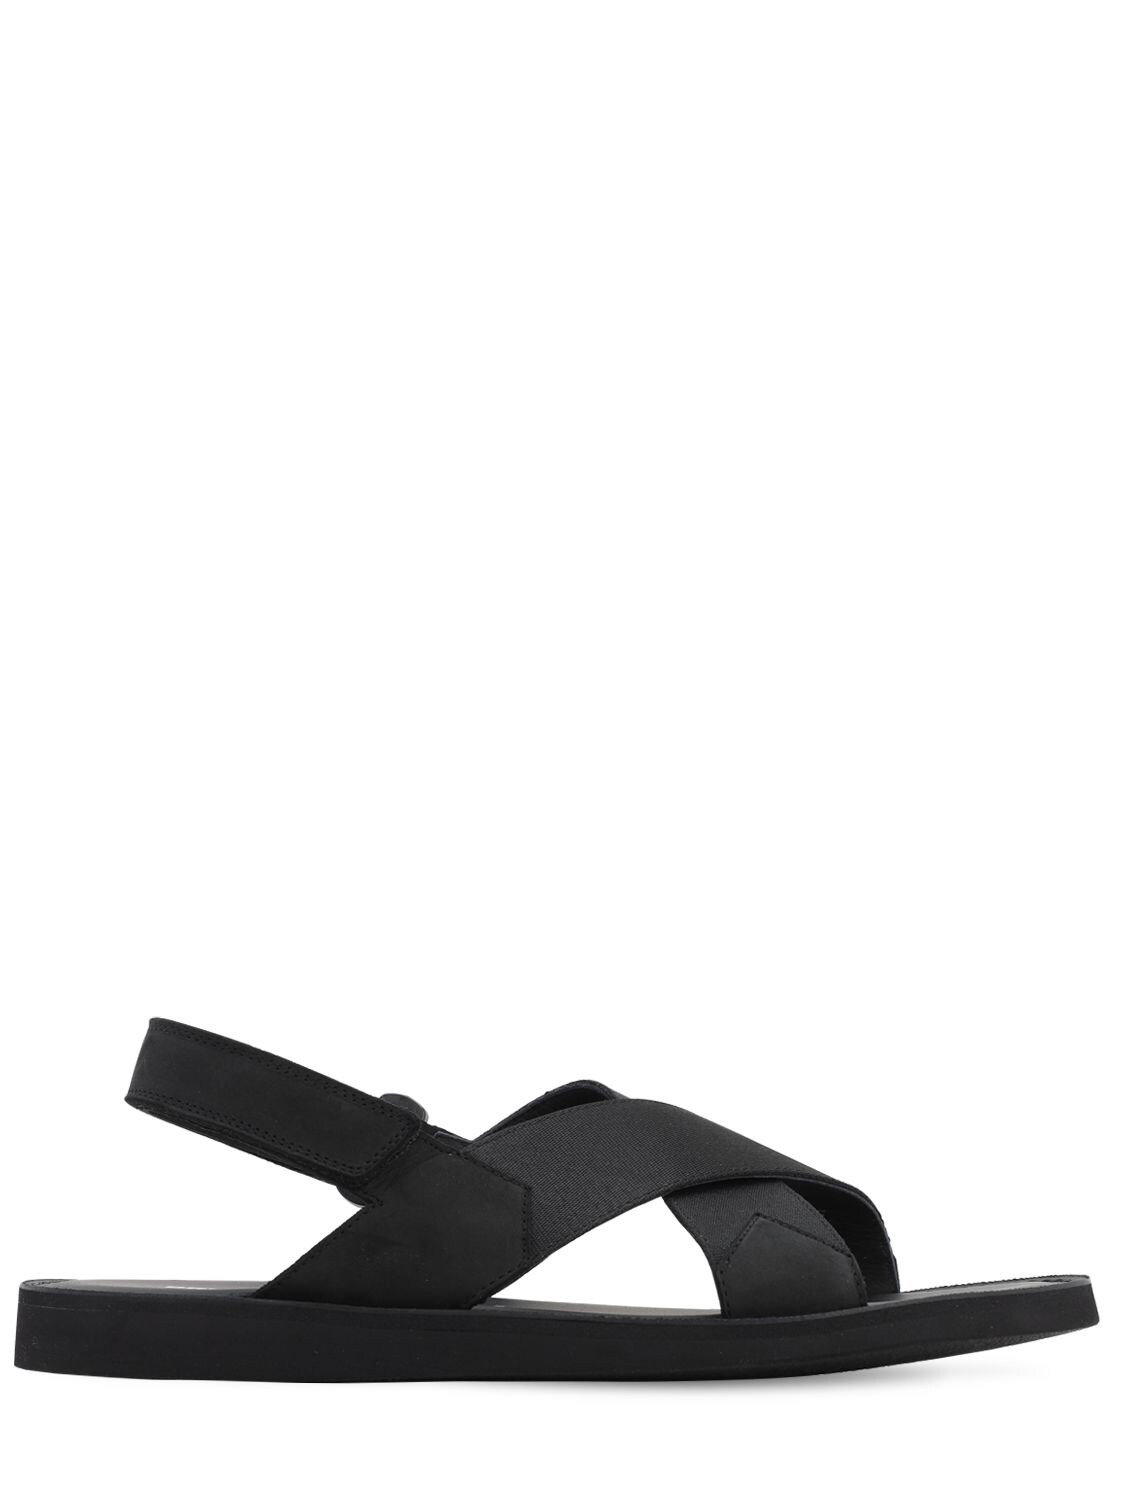 Bruno Bordese Leather & Nylon Sandals In Black